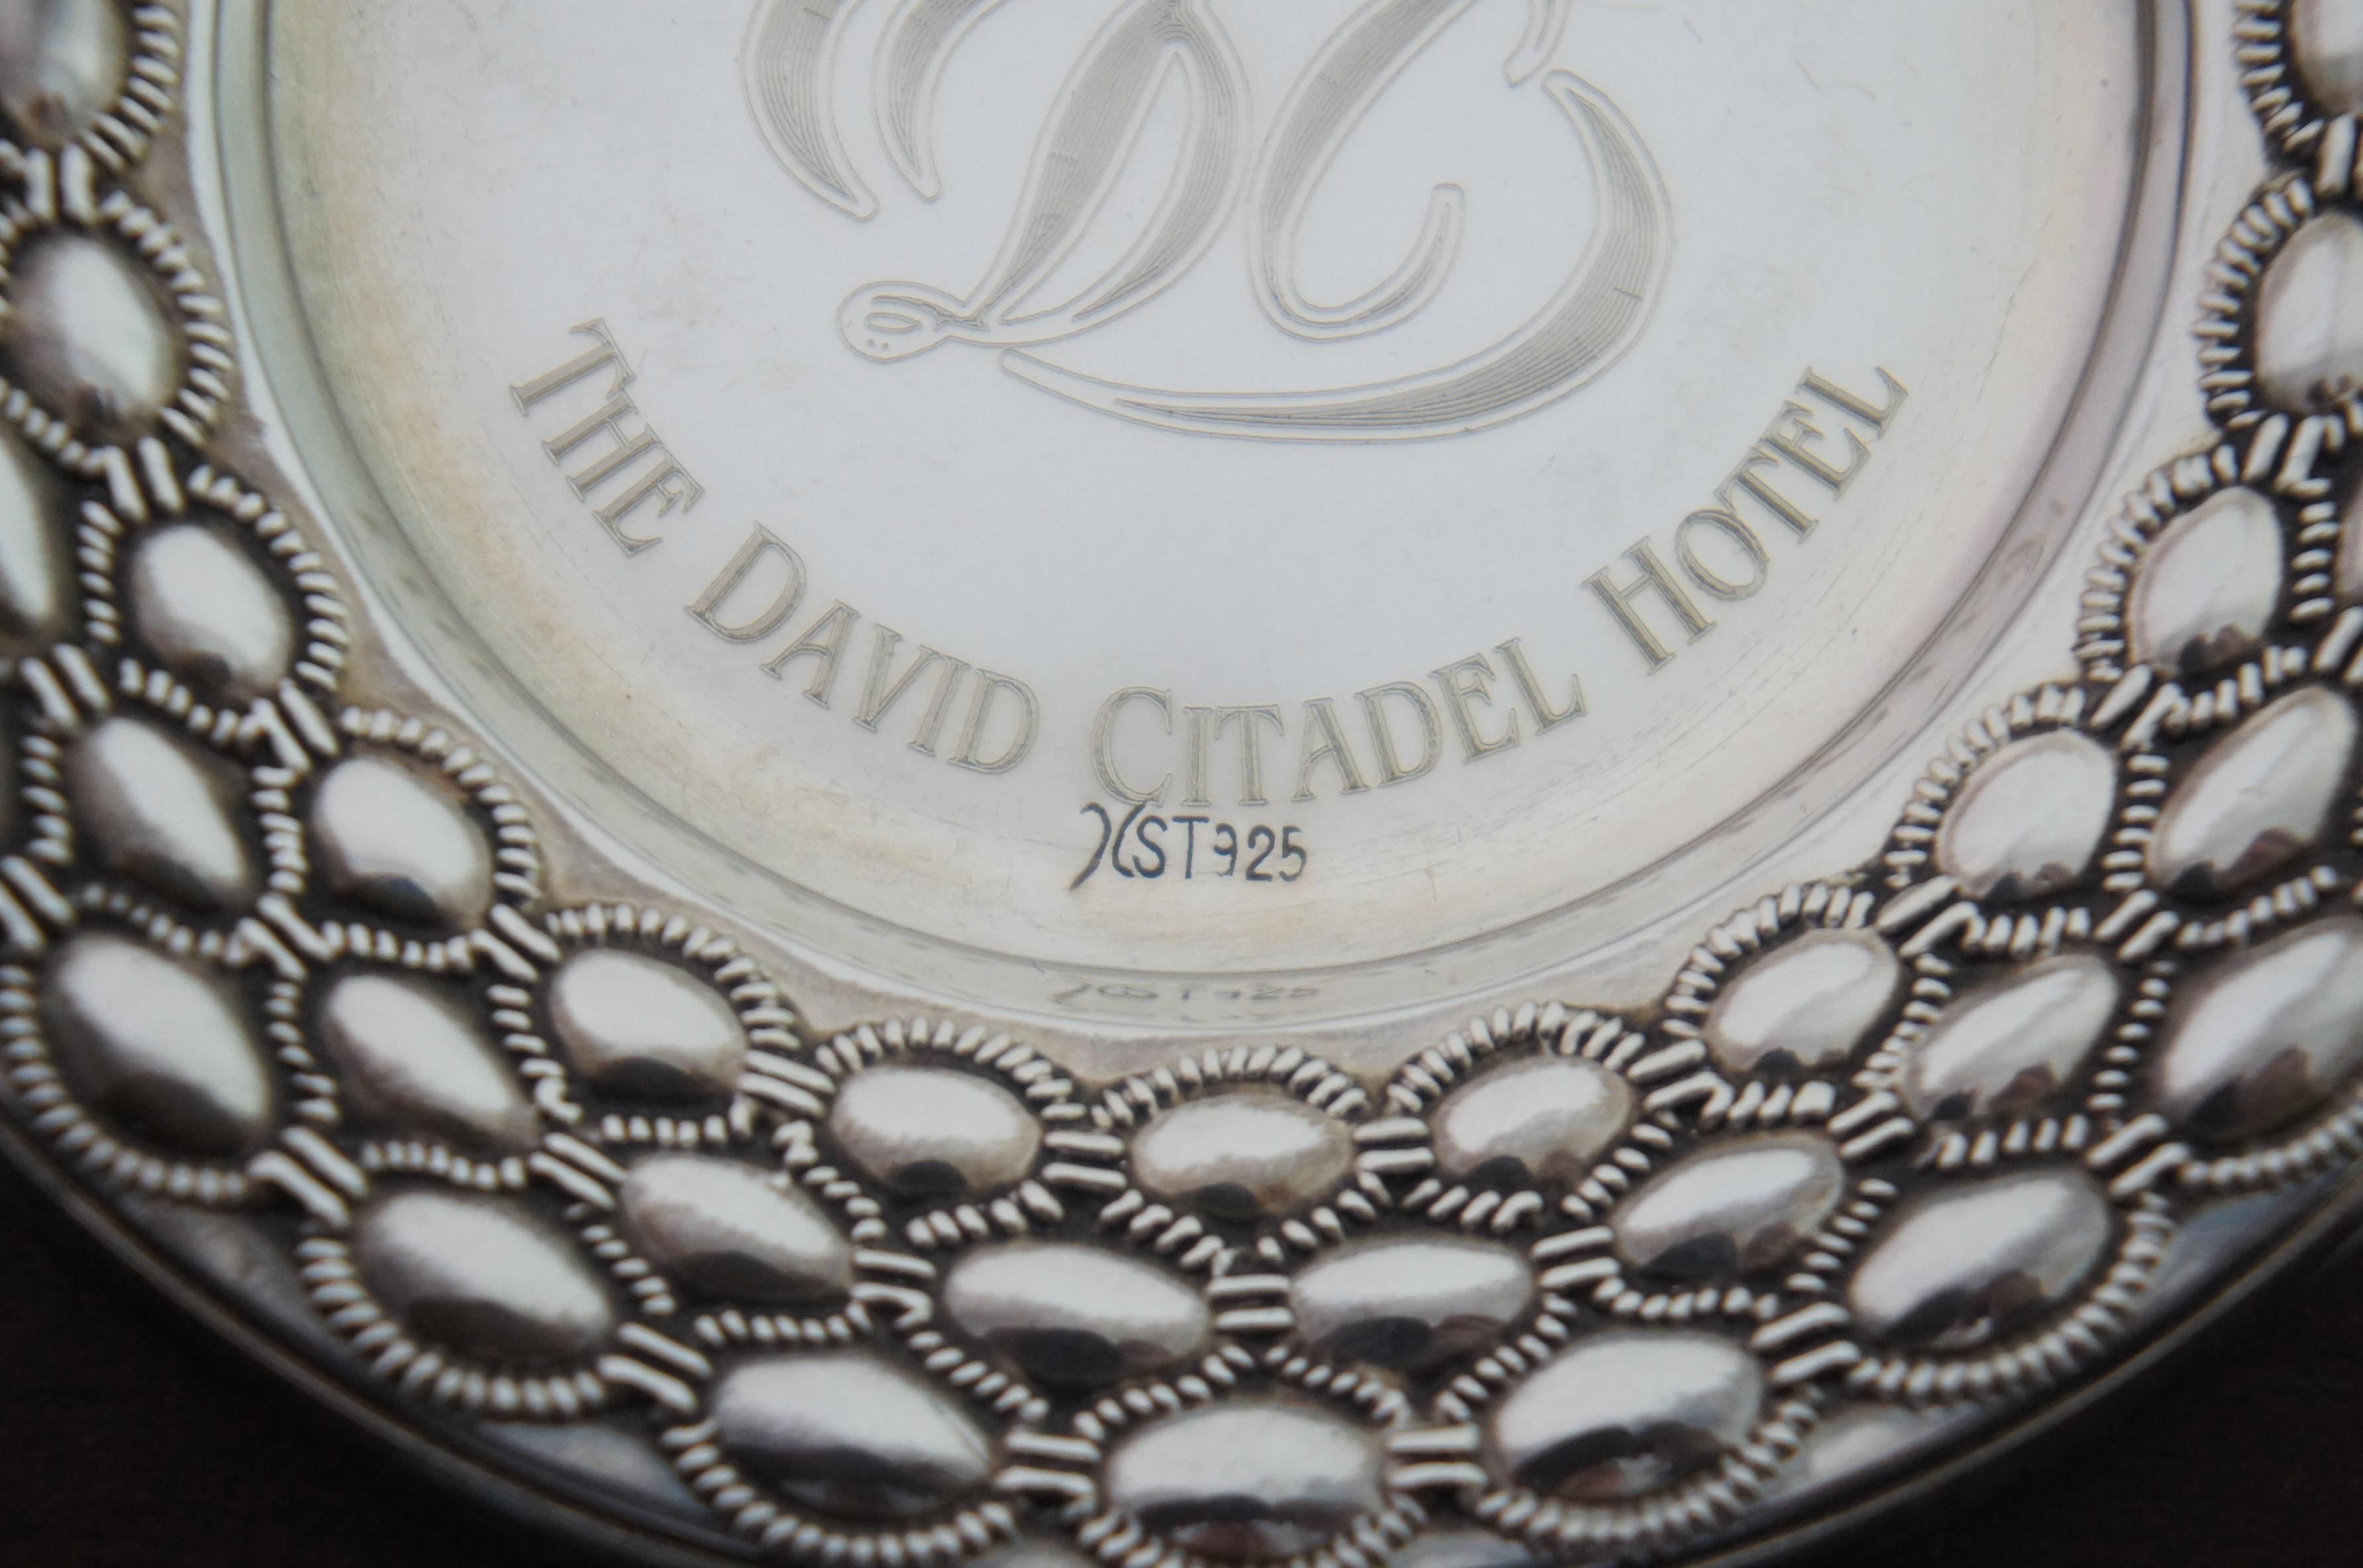 Rare David Citadel Hotel Sterling Silver 925 Wine Coaster Dish Plate 31g For Sale 1